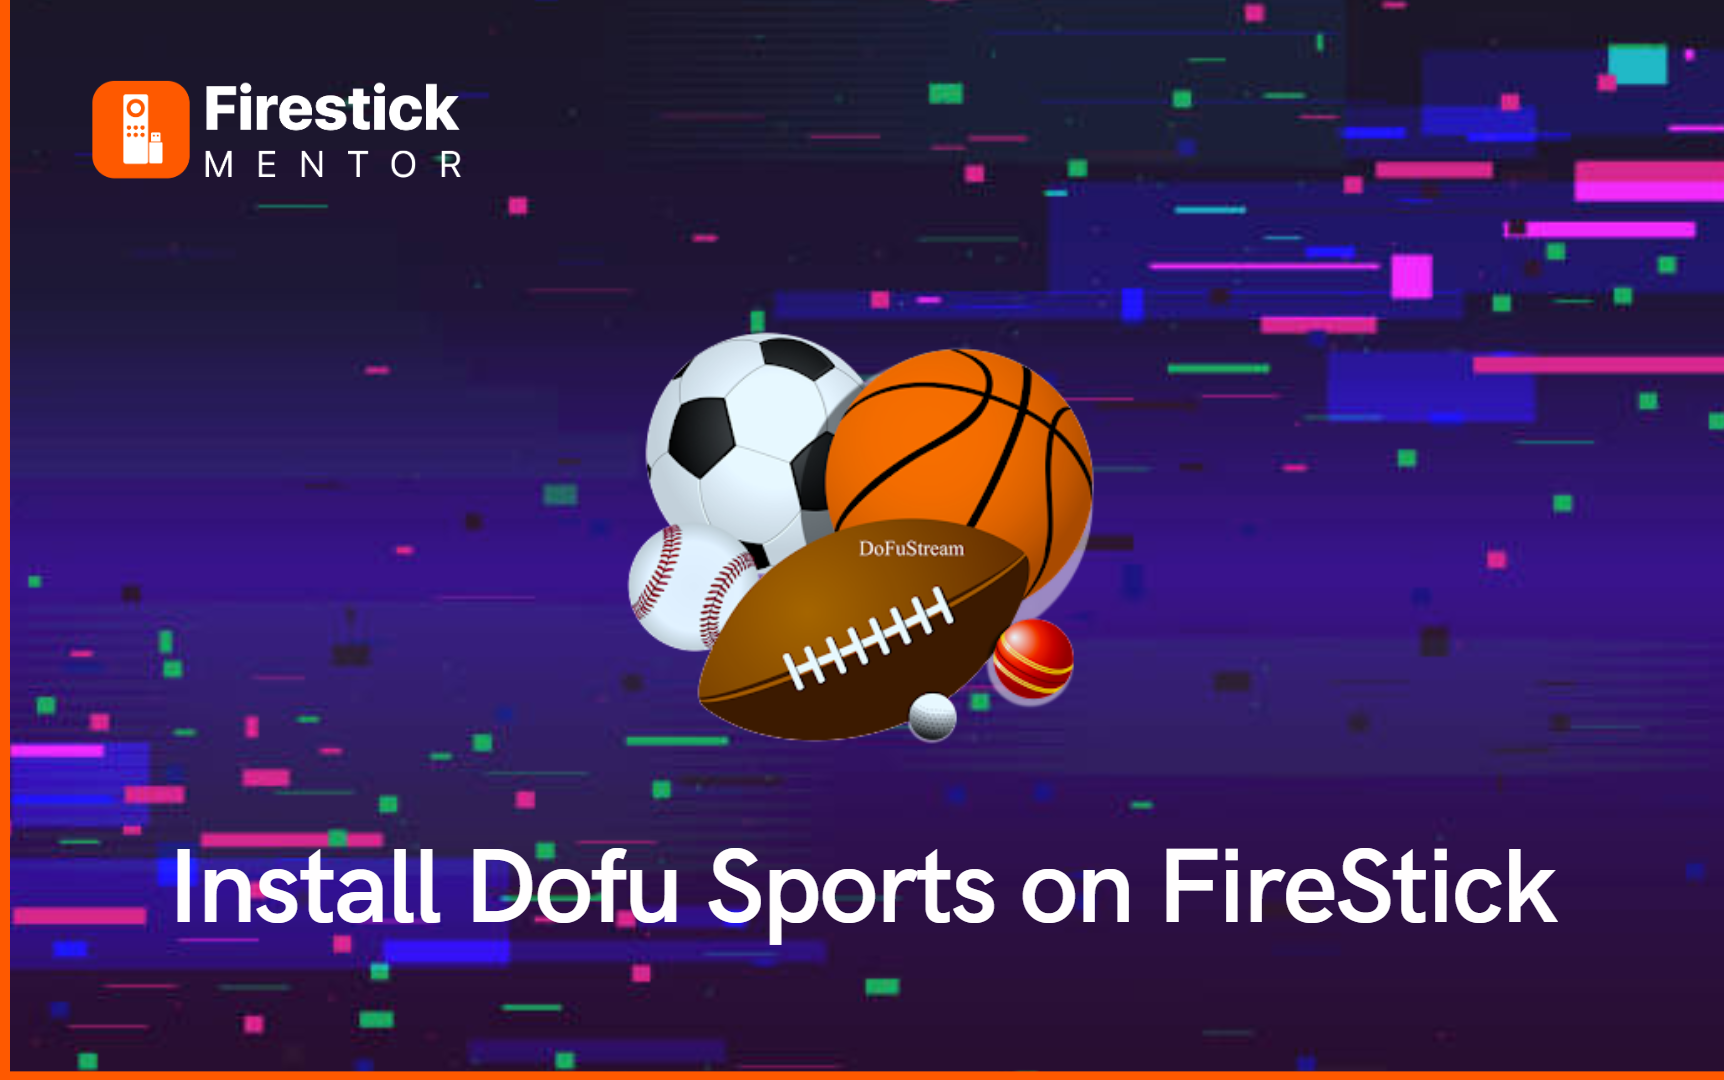 How to Install Dofu Sports on FireStick?